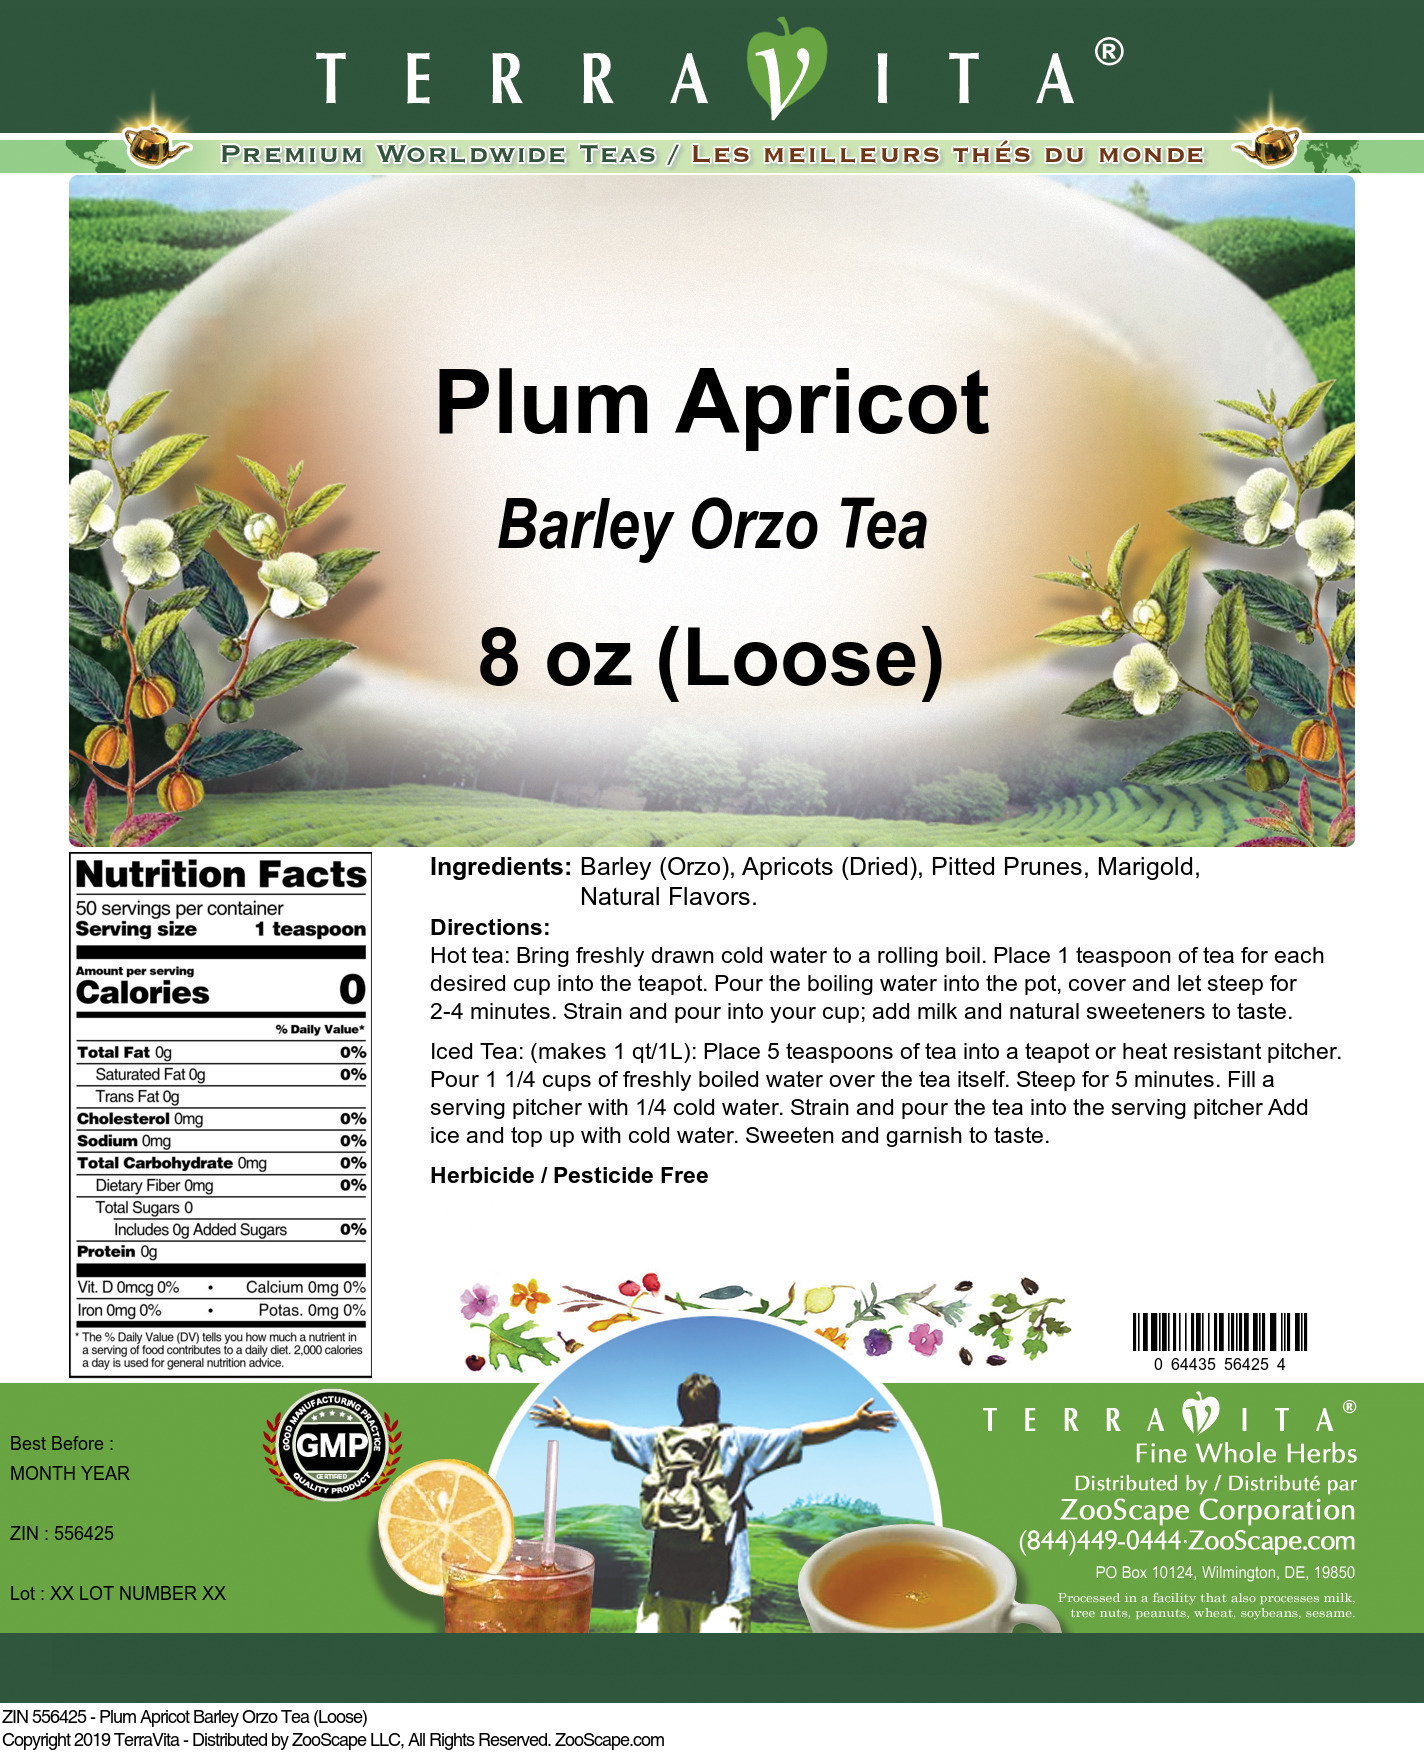 Plum Apricot Barley Orzo Tea (Loose) - Label